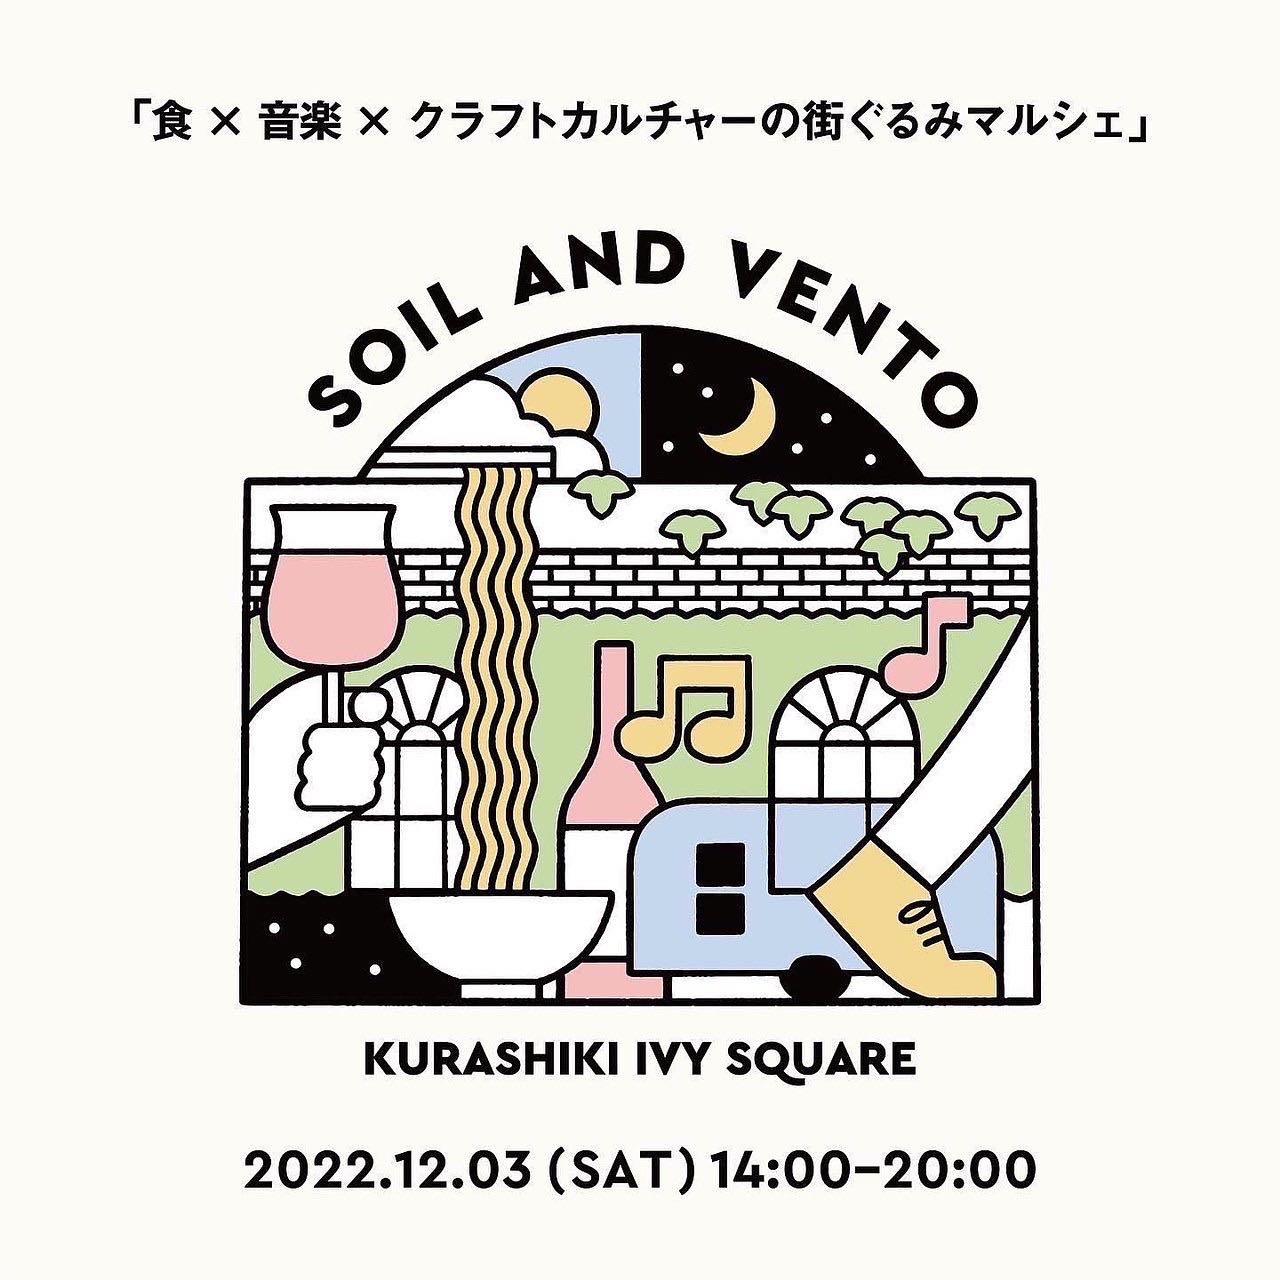 Soul and Vento at 倉敷アイビースクエア